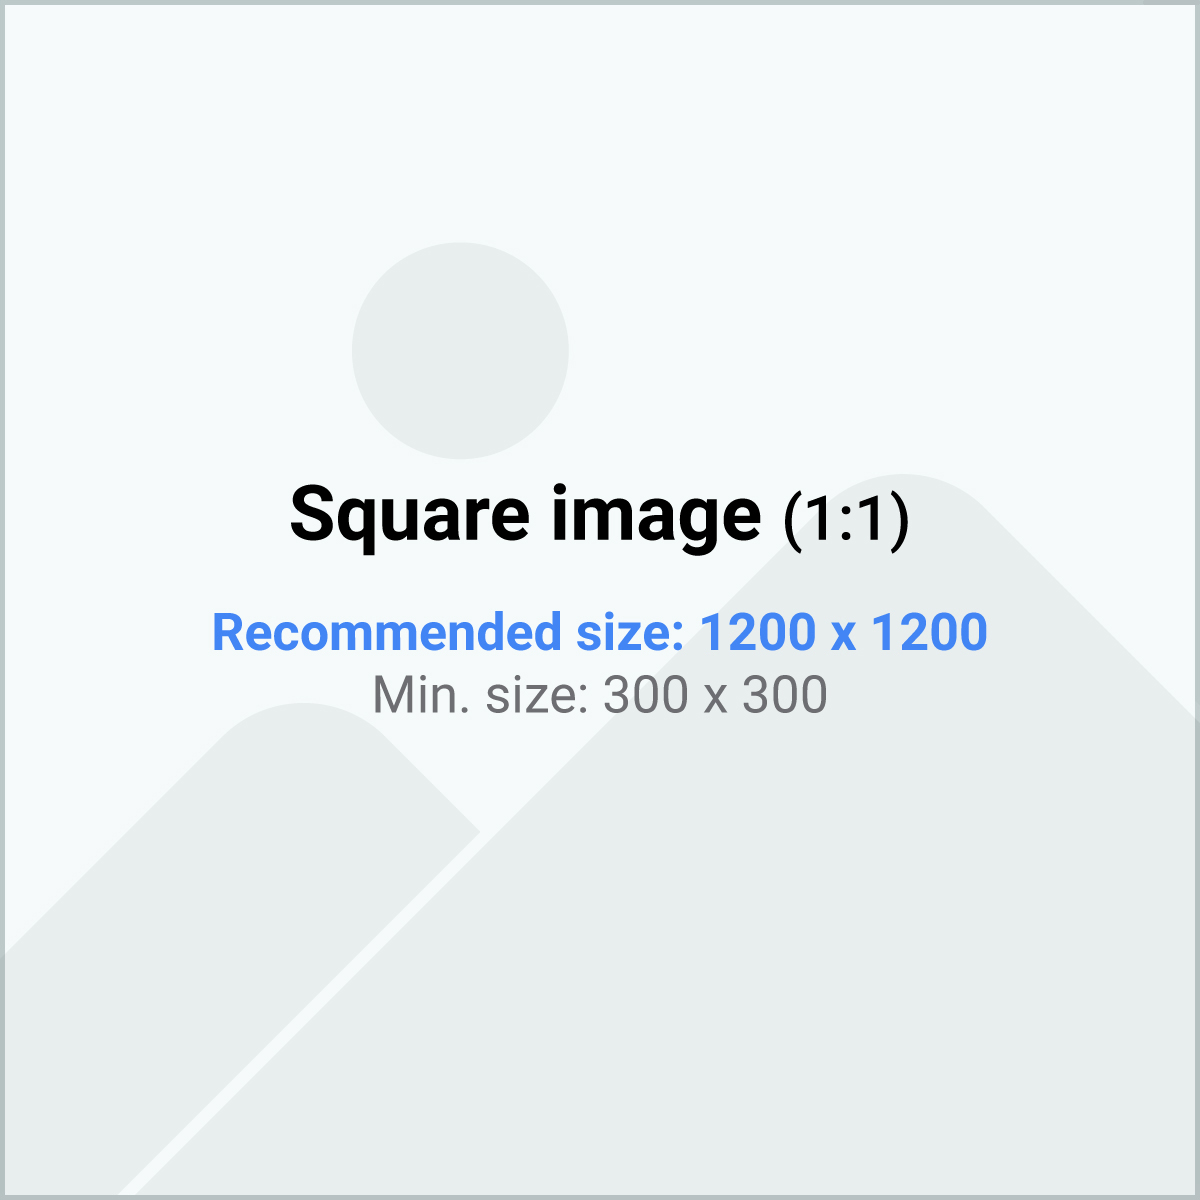 Square image - Performance Max Campaign